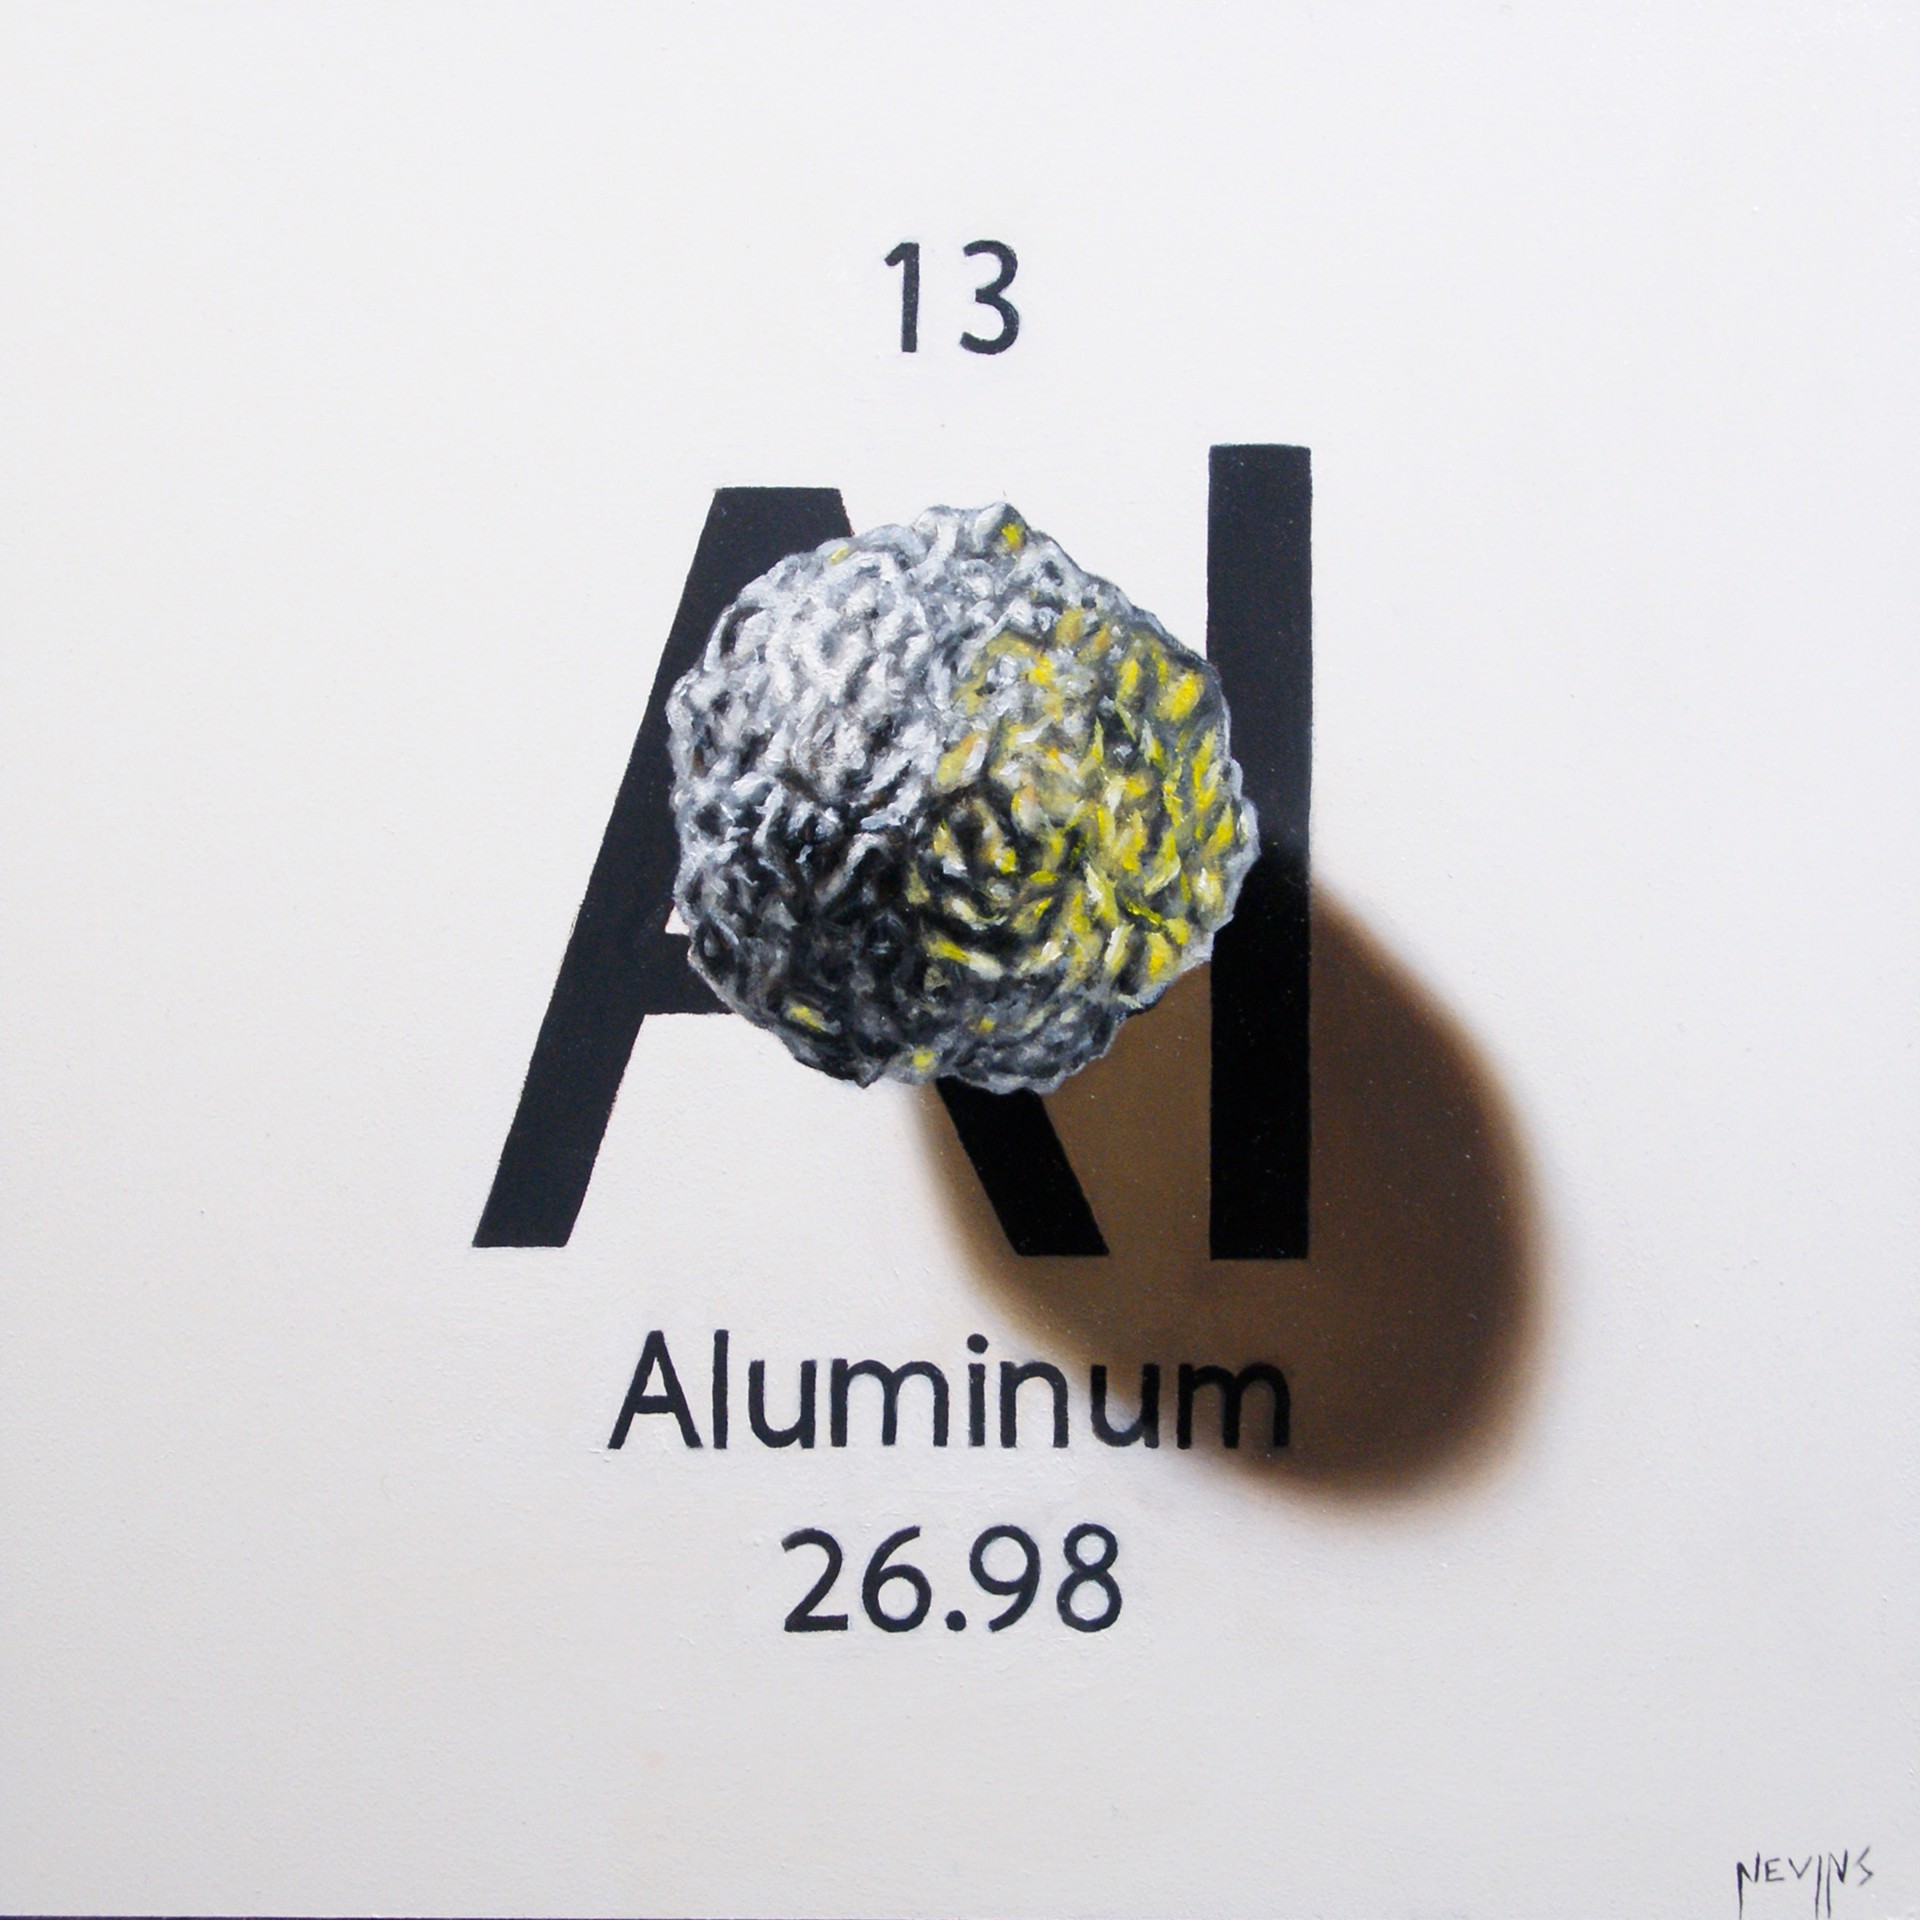 Aluminum by Patrick Nevins